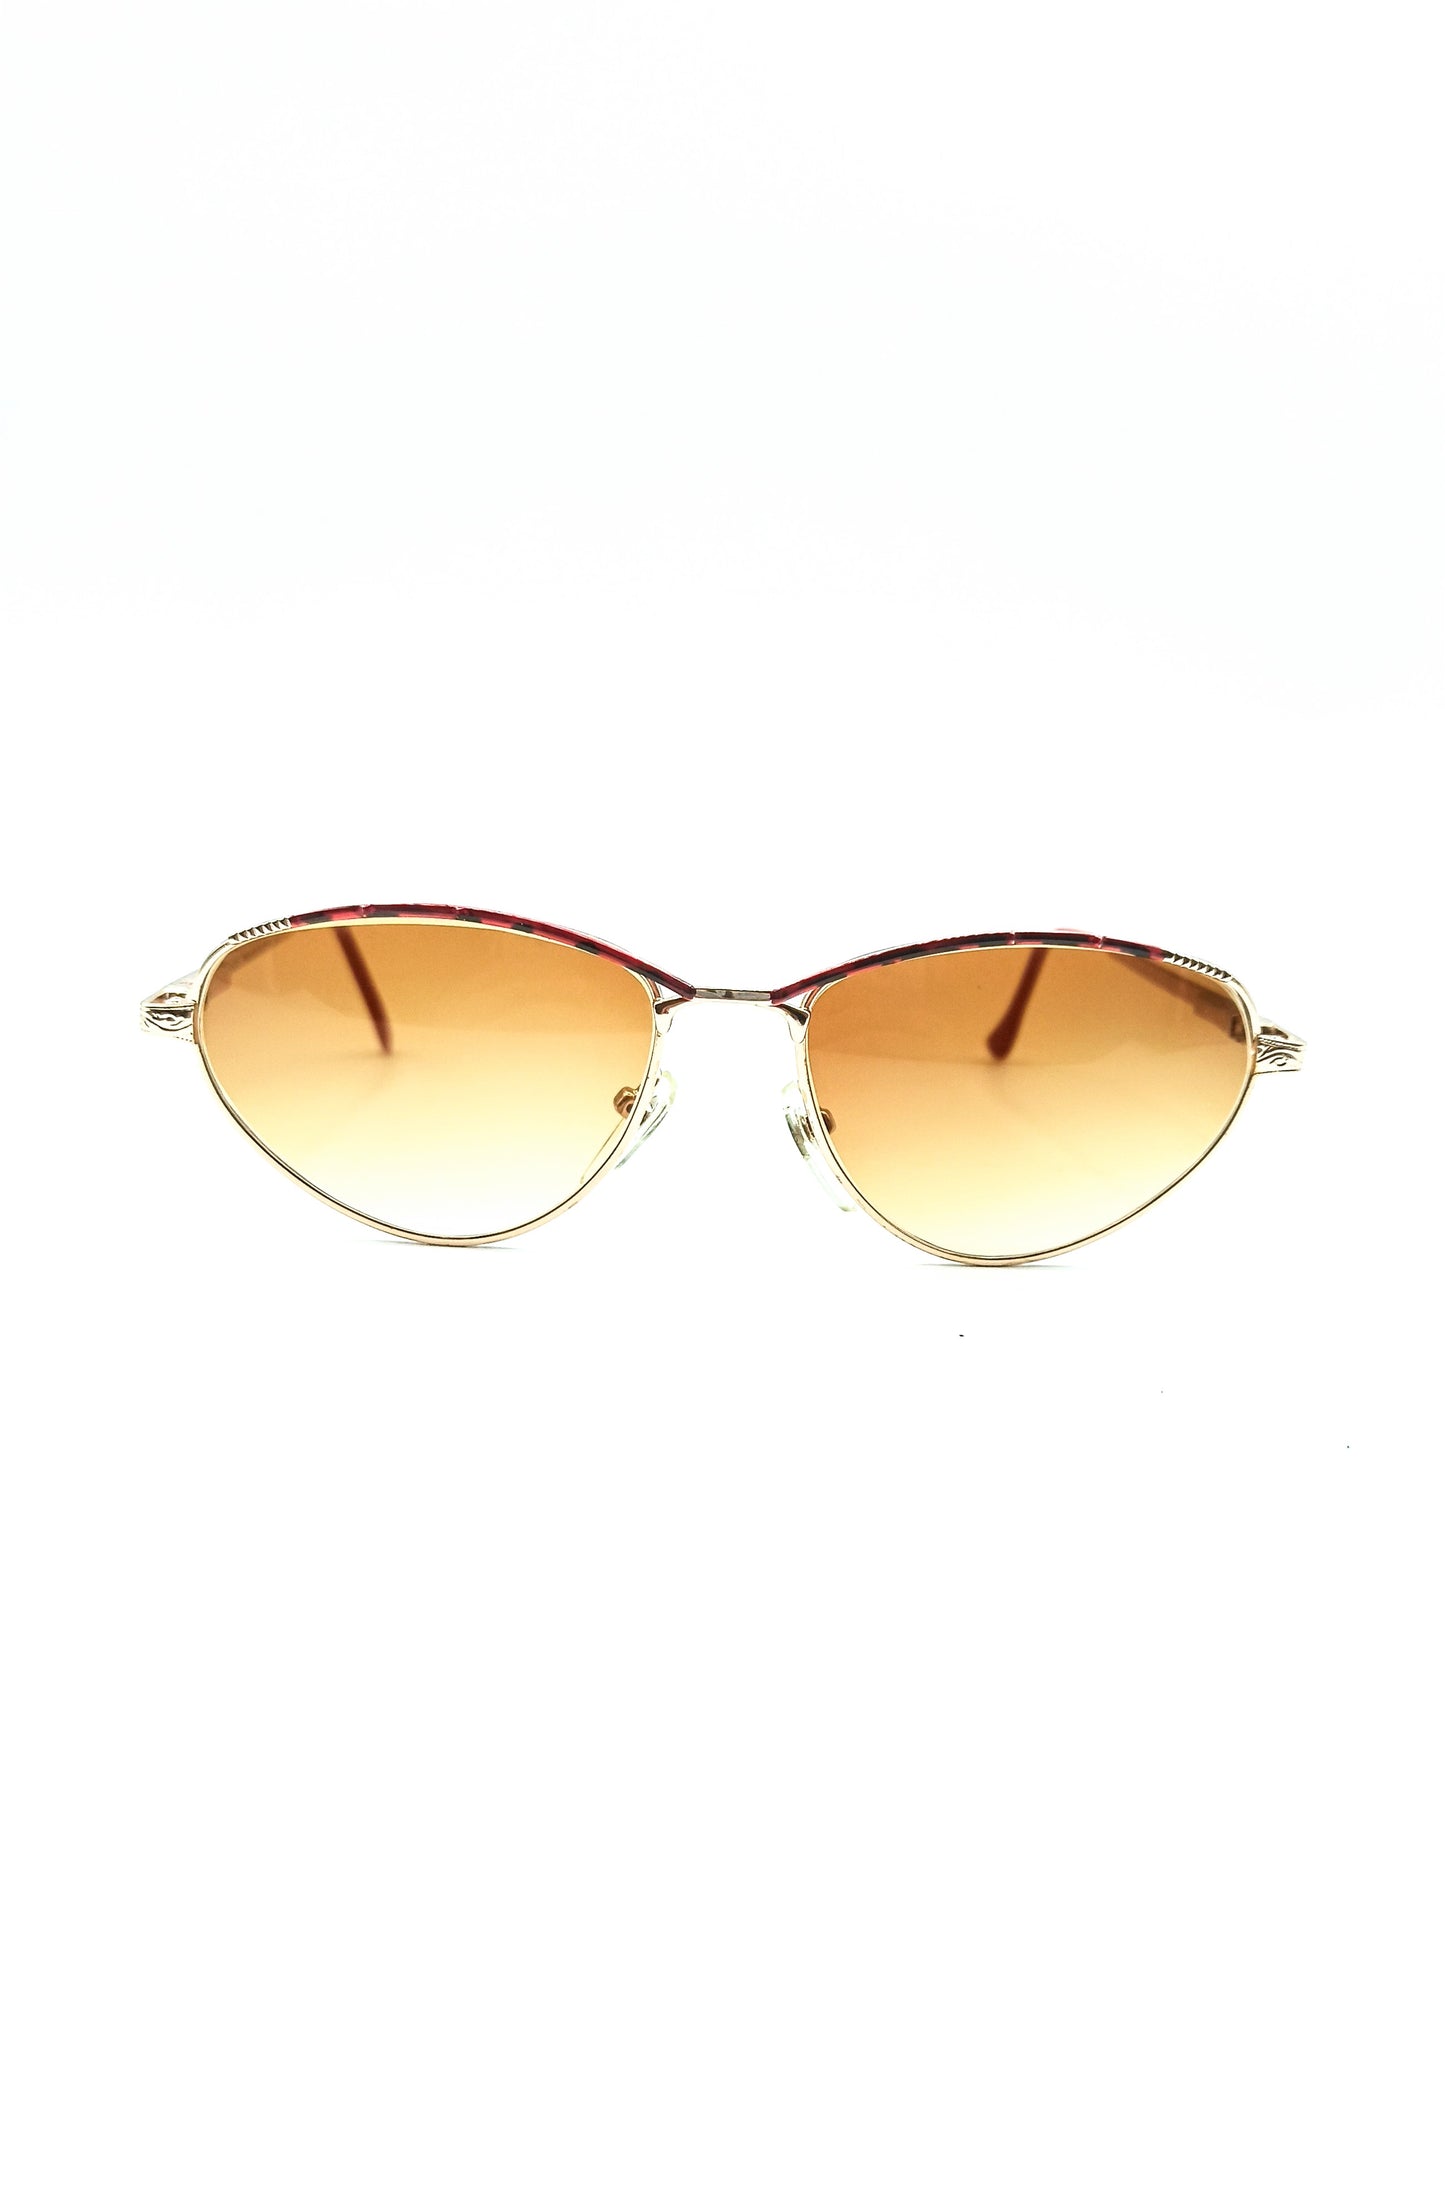 Vintage sunglasses for women Qoolst Greta made in Spain